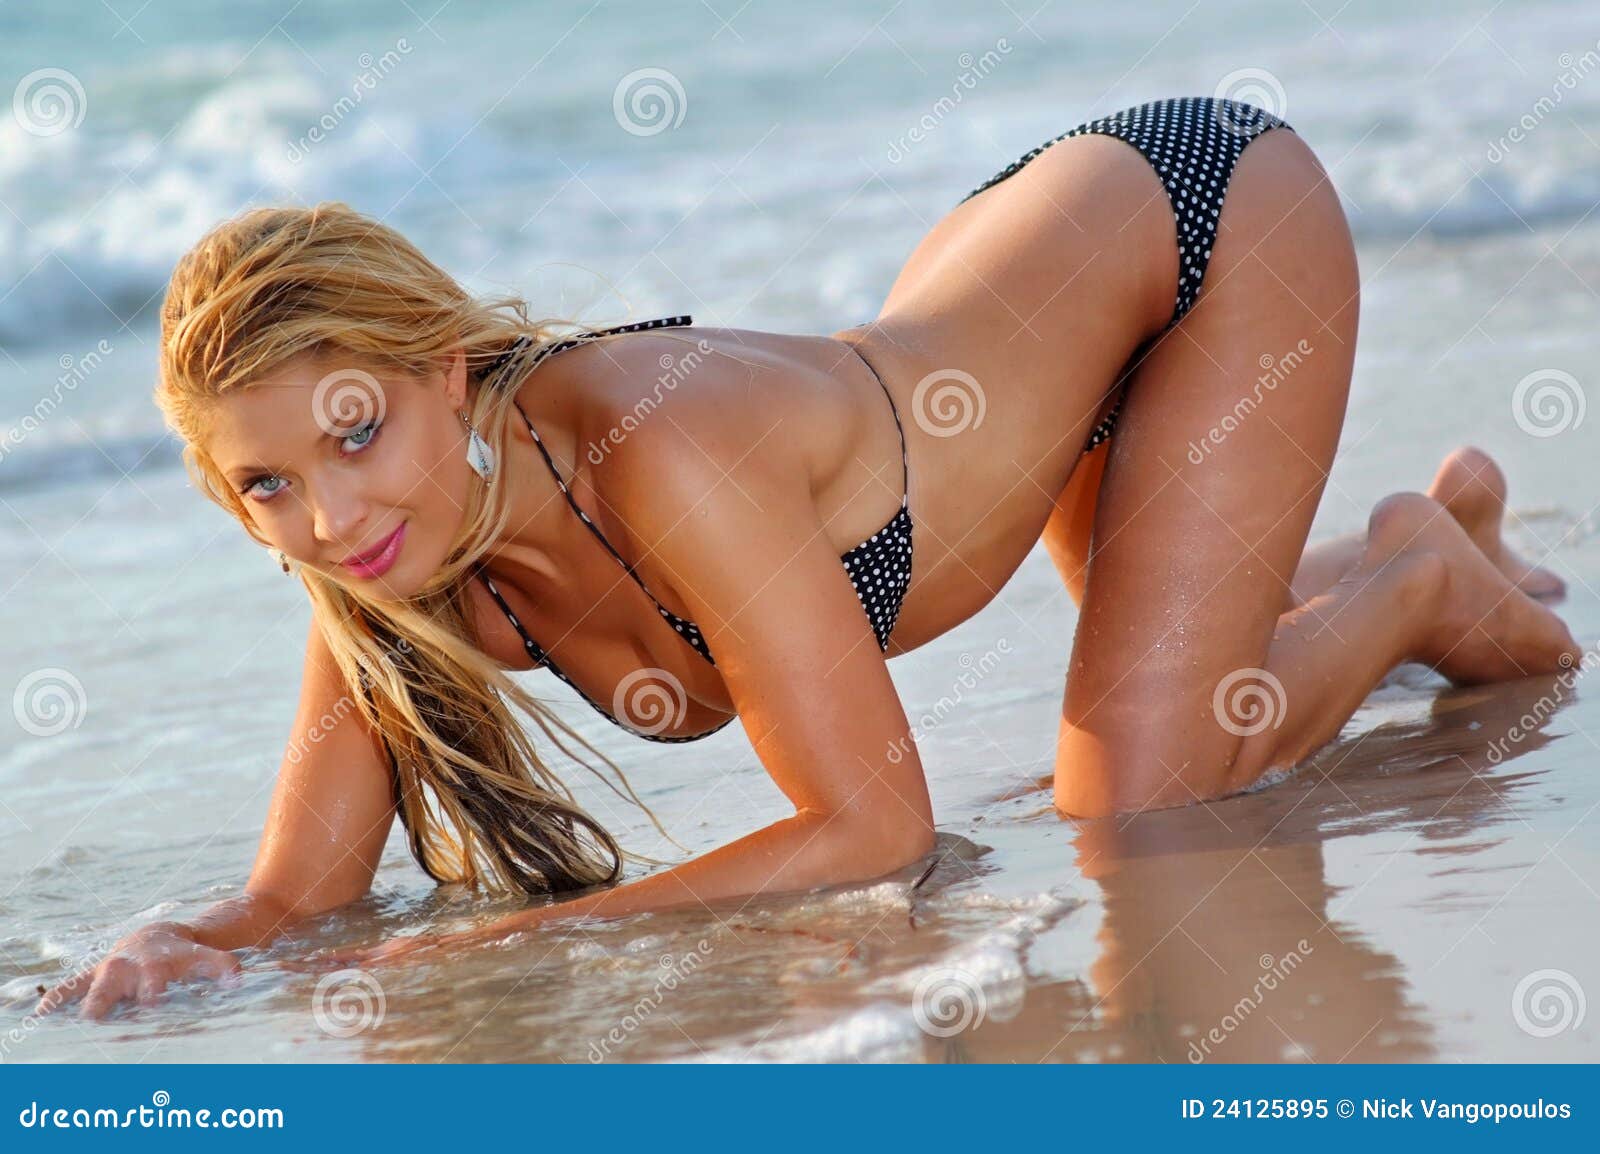 Bikini Girl Stock Image Image Of Flirting Glamour Beach 49500 Hot Sex Picture hq nude photo